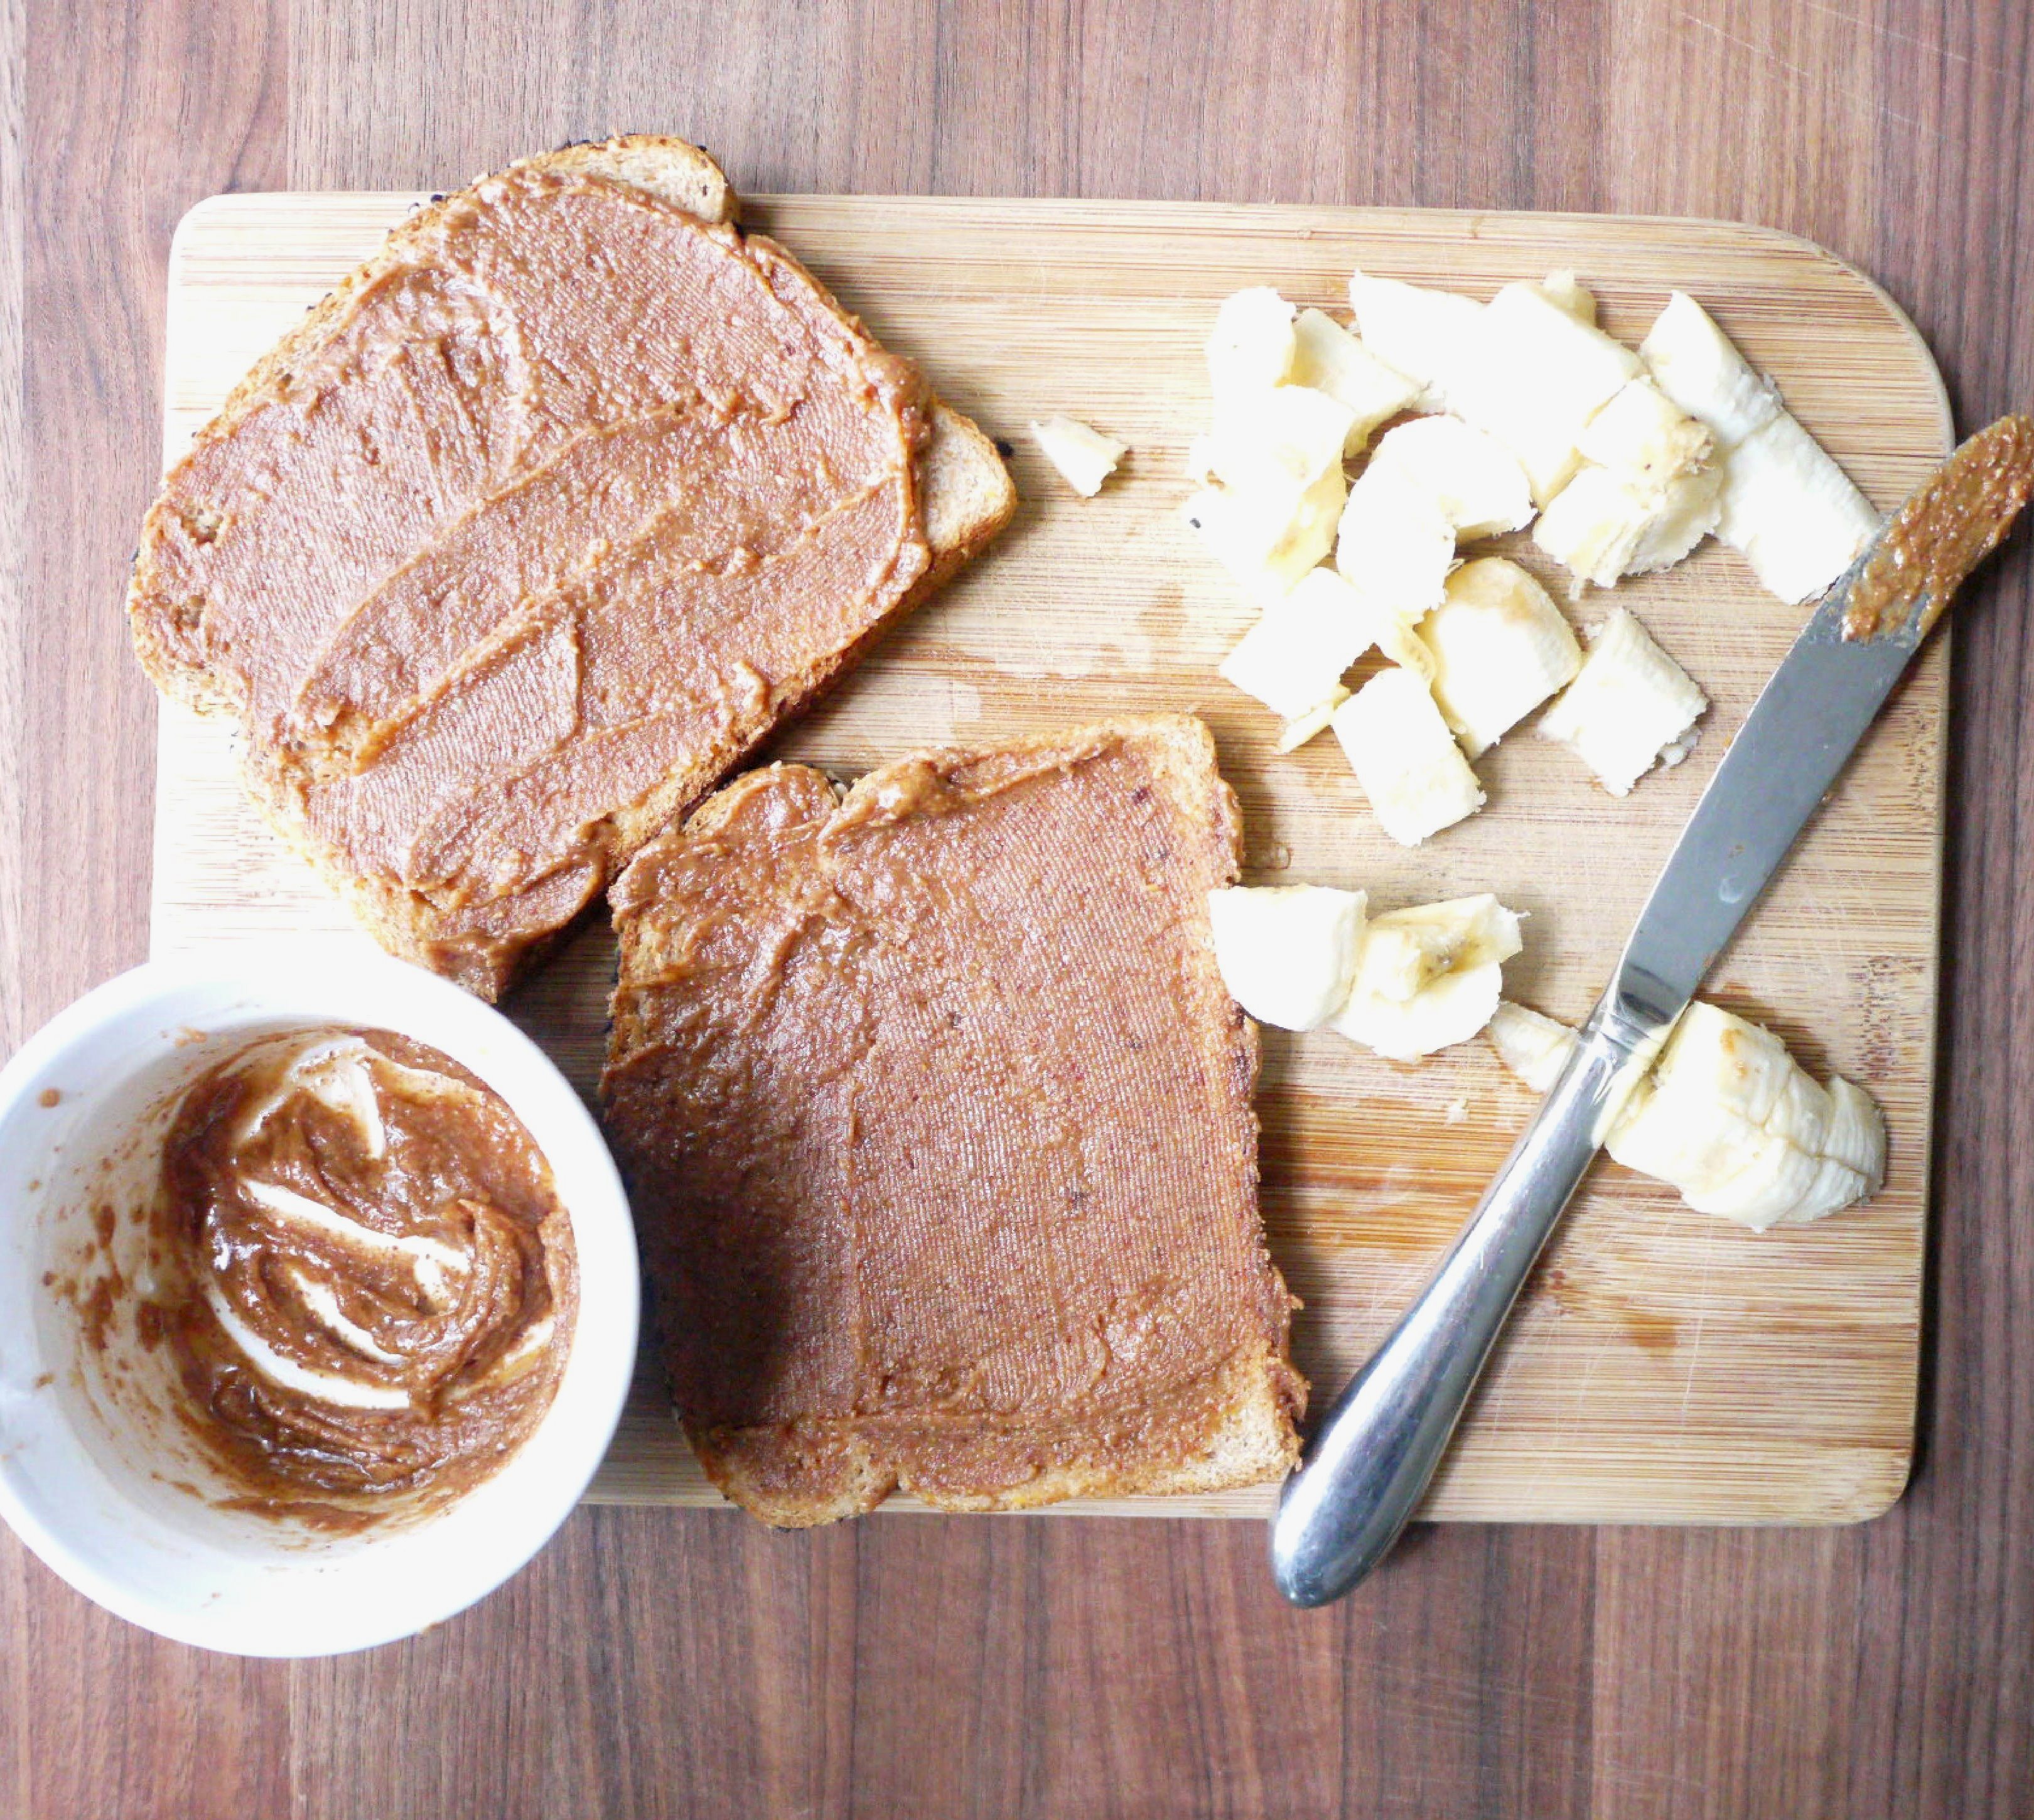 https://www.healthyrecipeecstasy.com/wp-content/uploads/2014/08/banana-almond-butter-french-toast-1.jpg